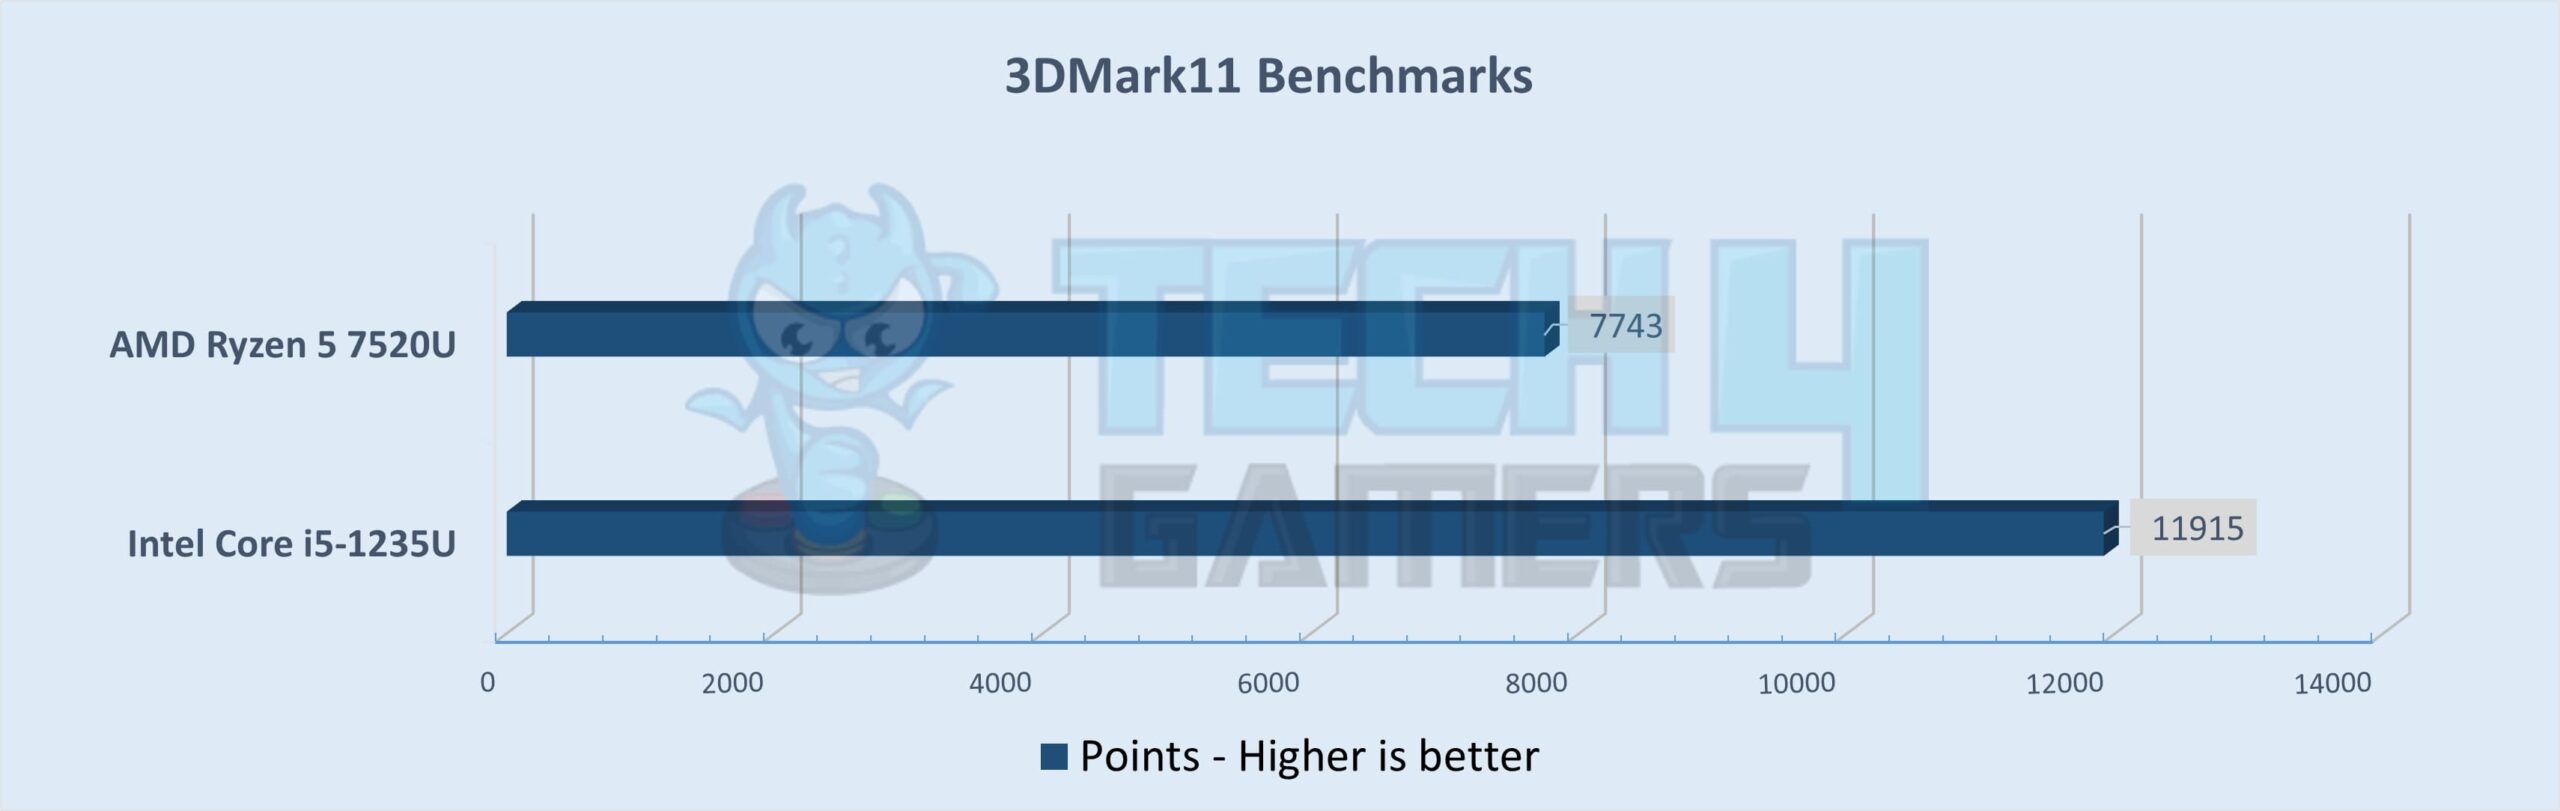 3DMark11 Benchmarks